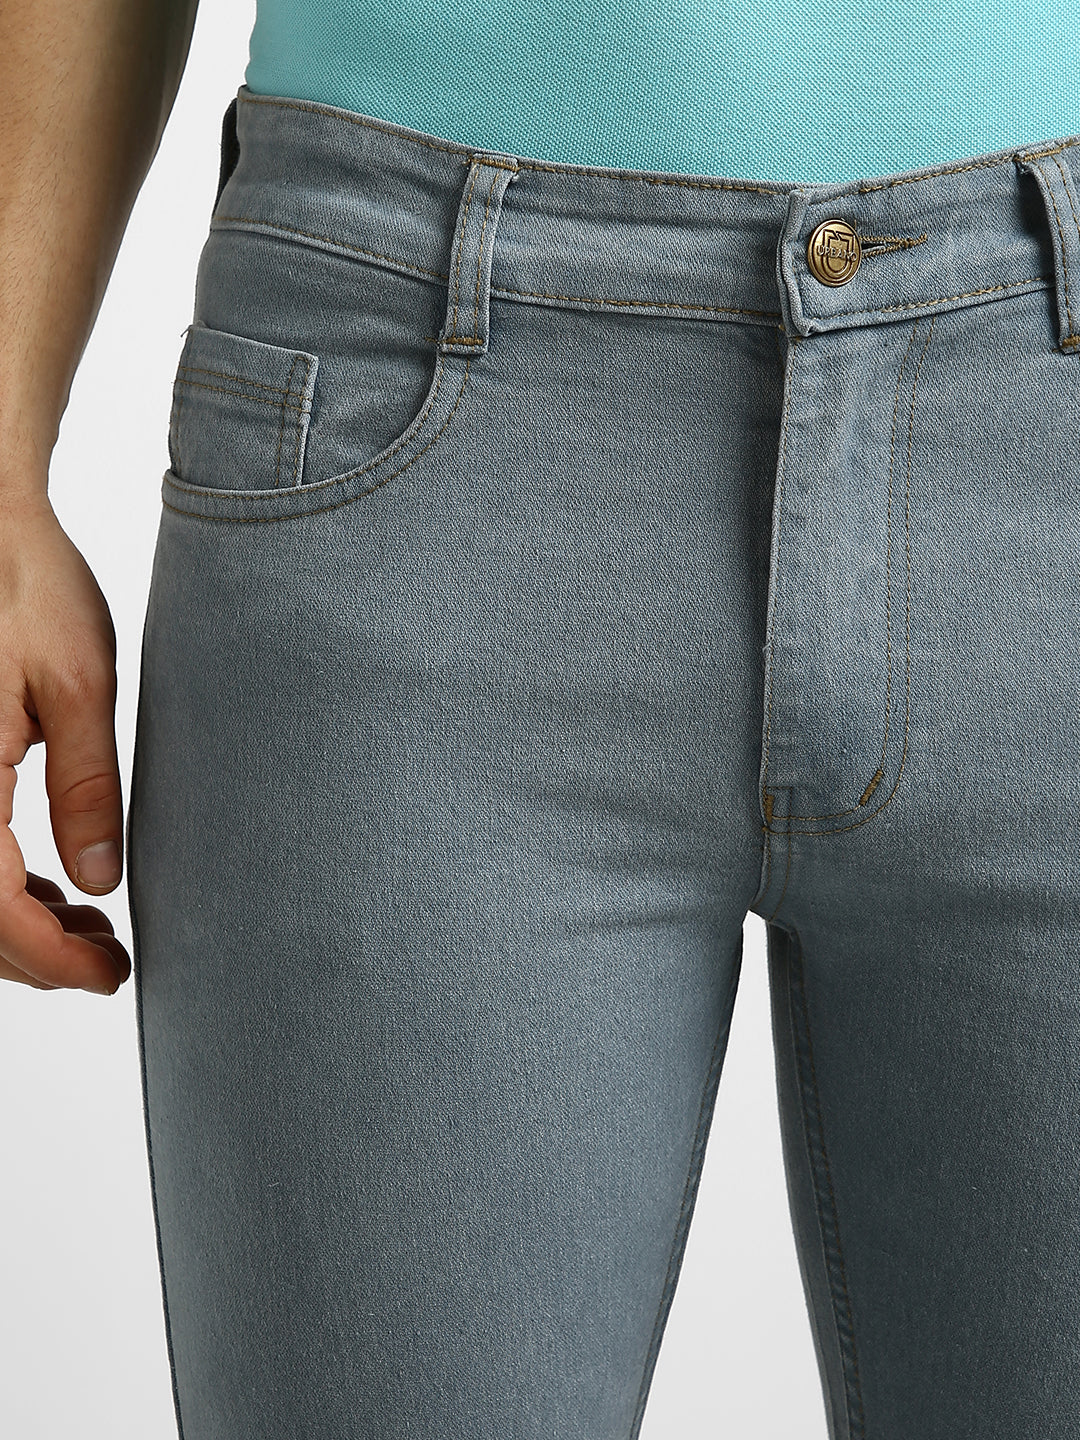 Men's Light Grey Slim Fit Washed Jeans Stretchable